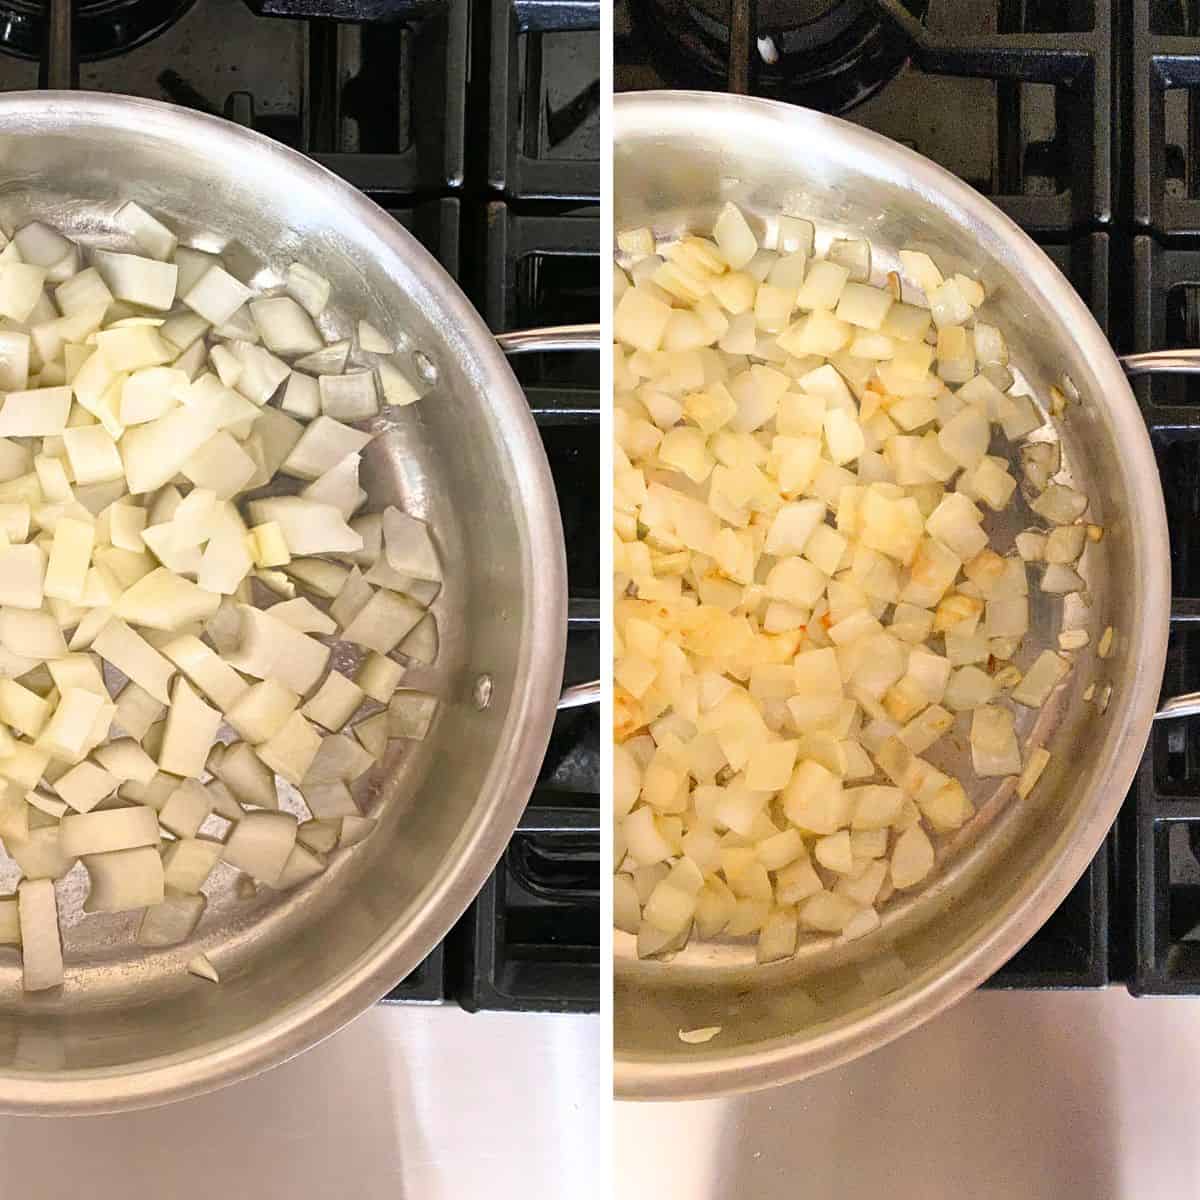 Sautéed onions in stainless steel sauté pan